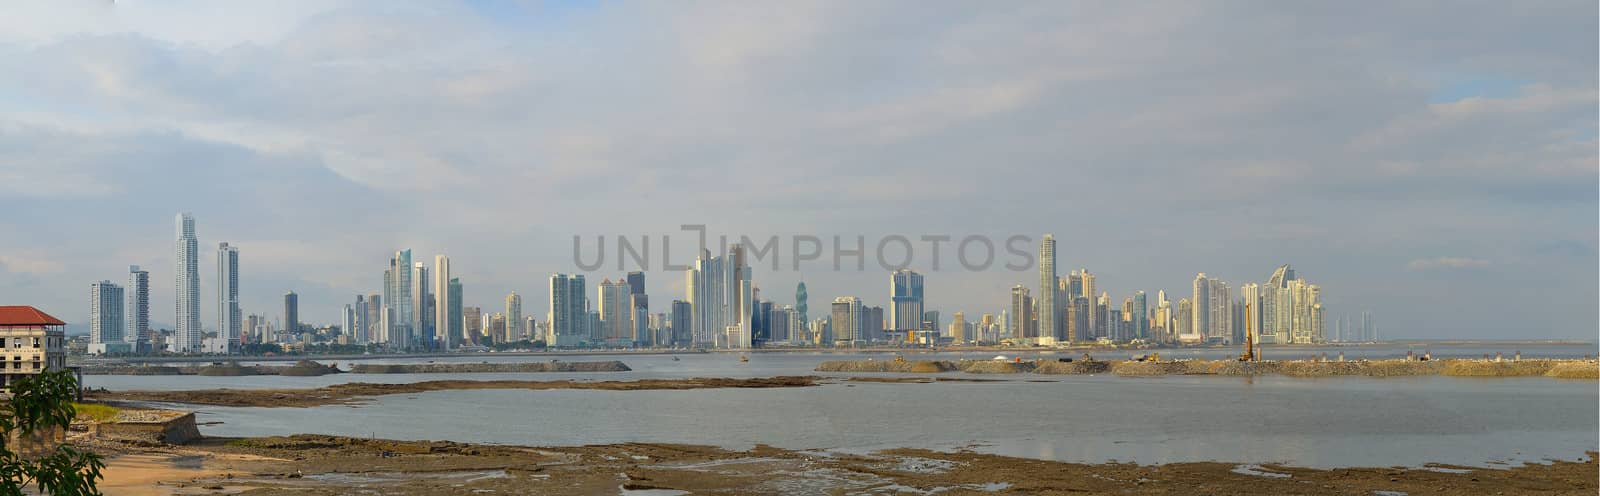 Panorama of Panama City by rmbarricarte